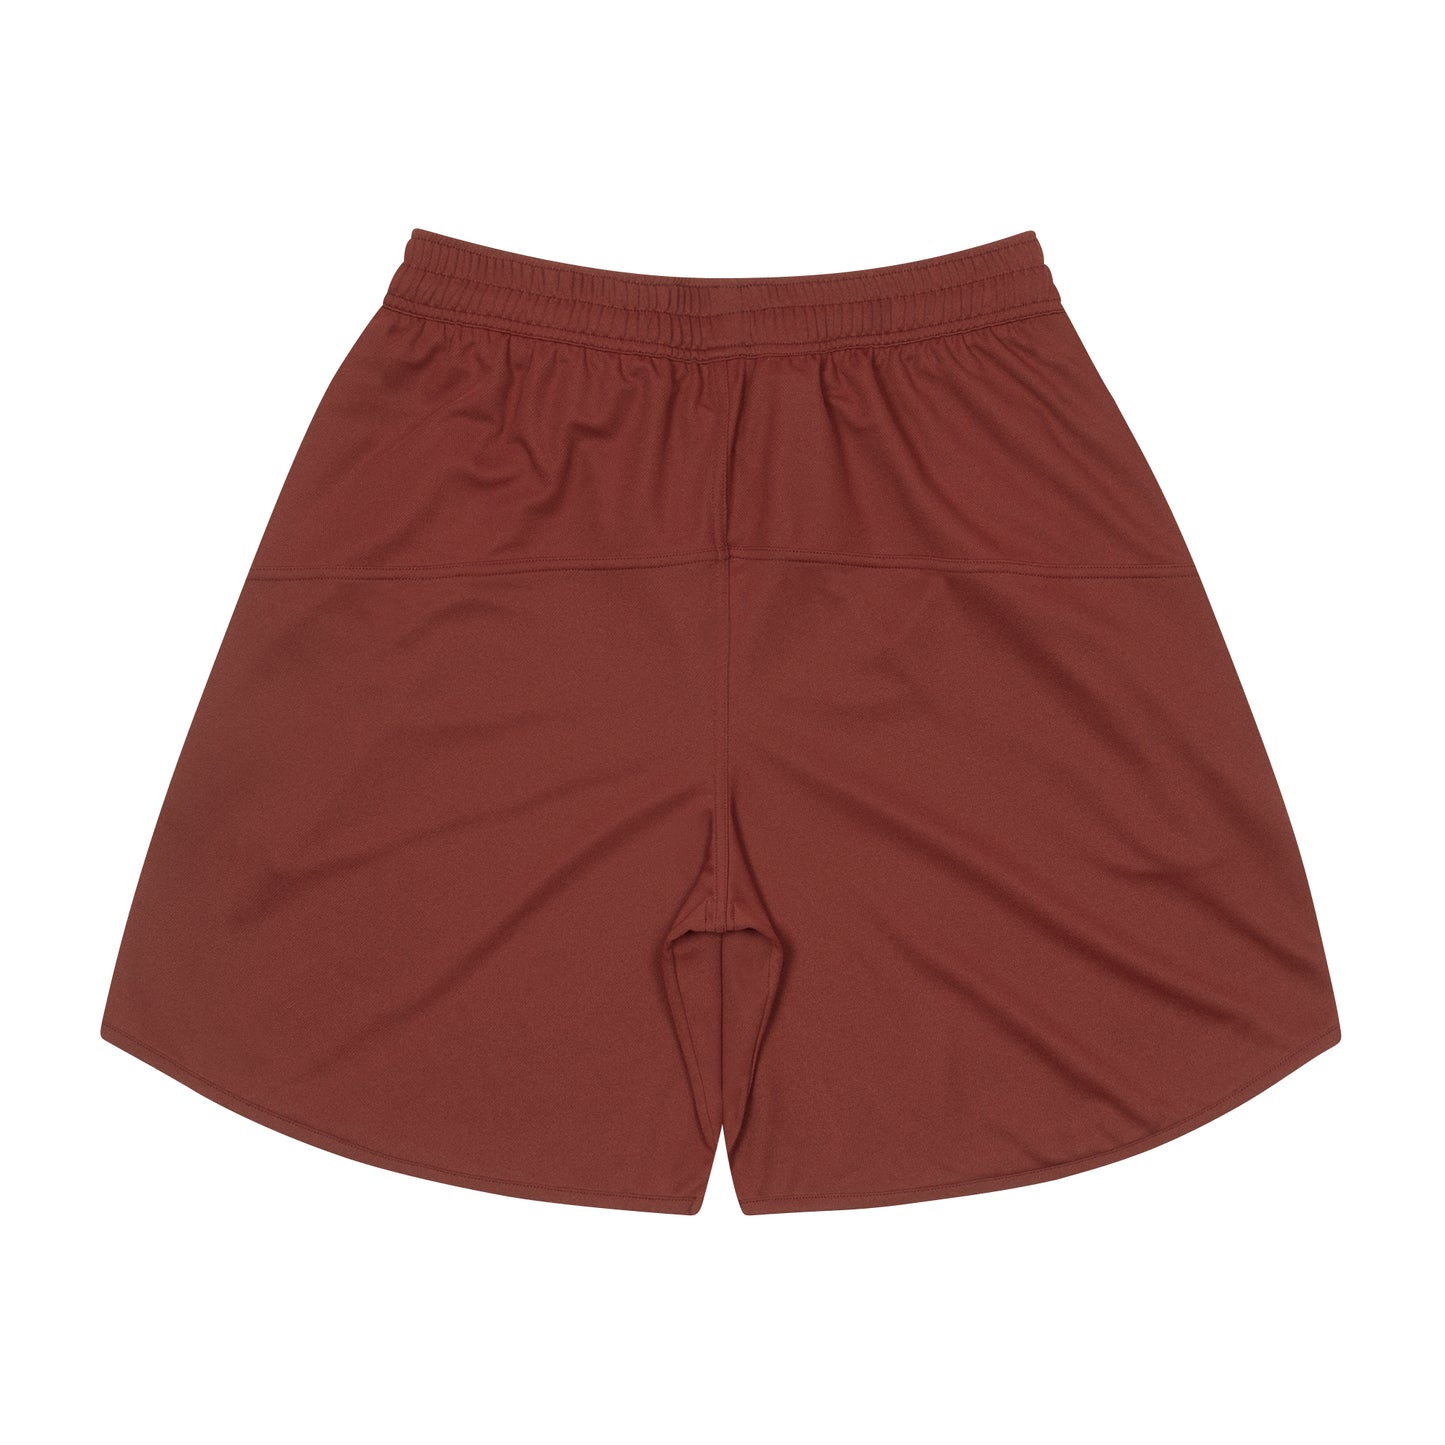 Basic Zip Shorts (barn red/off white)